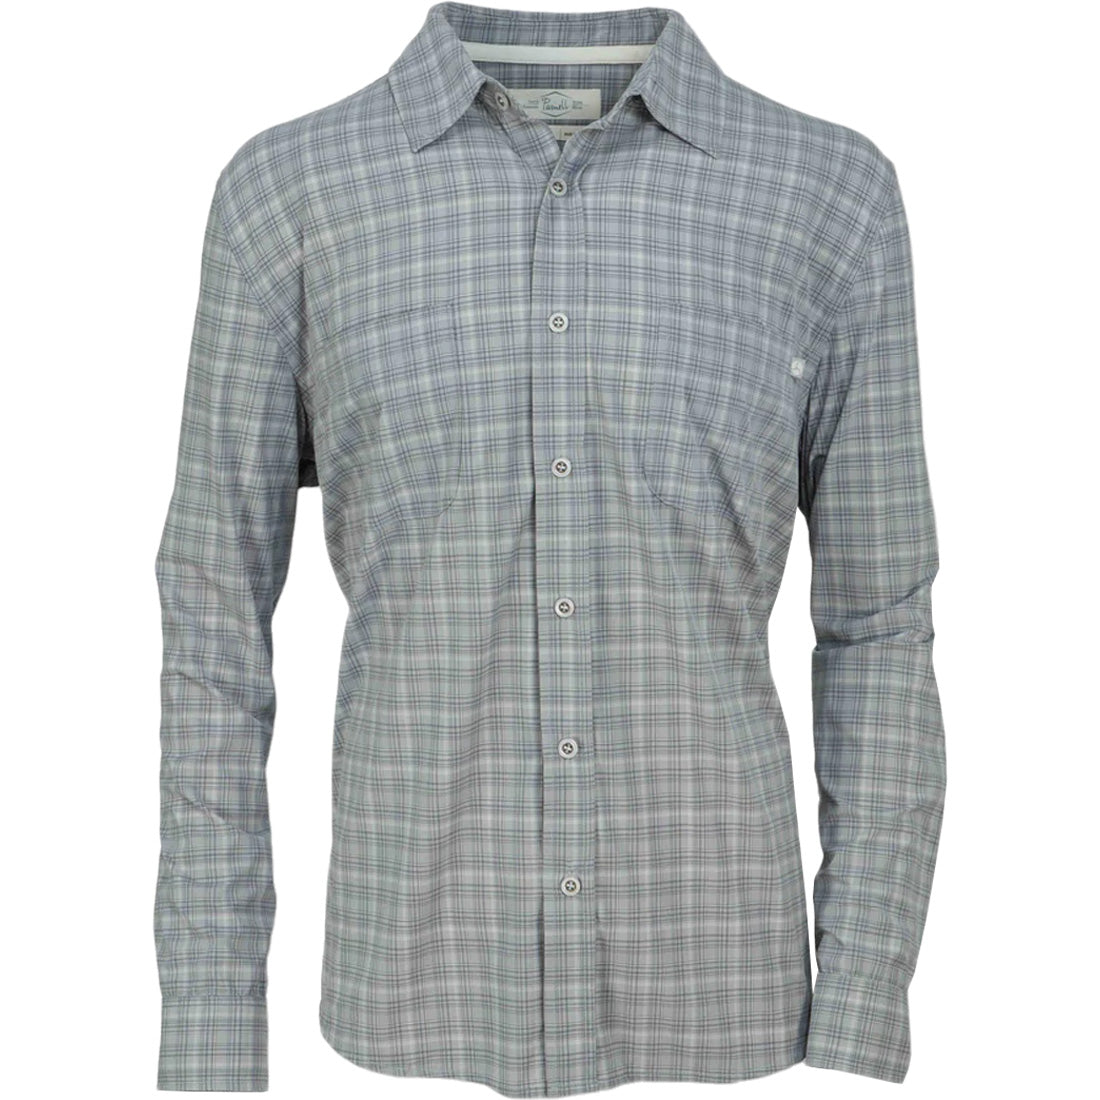 Purnell Long Sleeve Quick-Dry Shirt - Men's